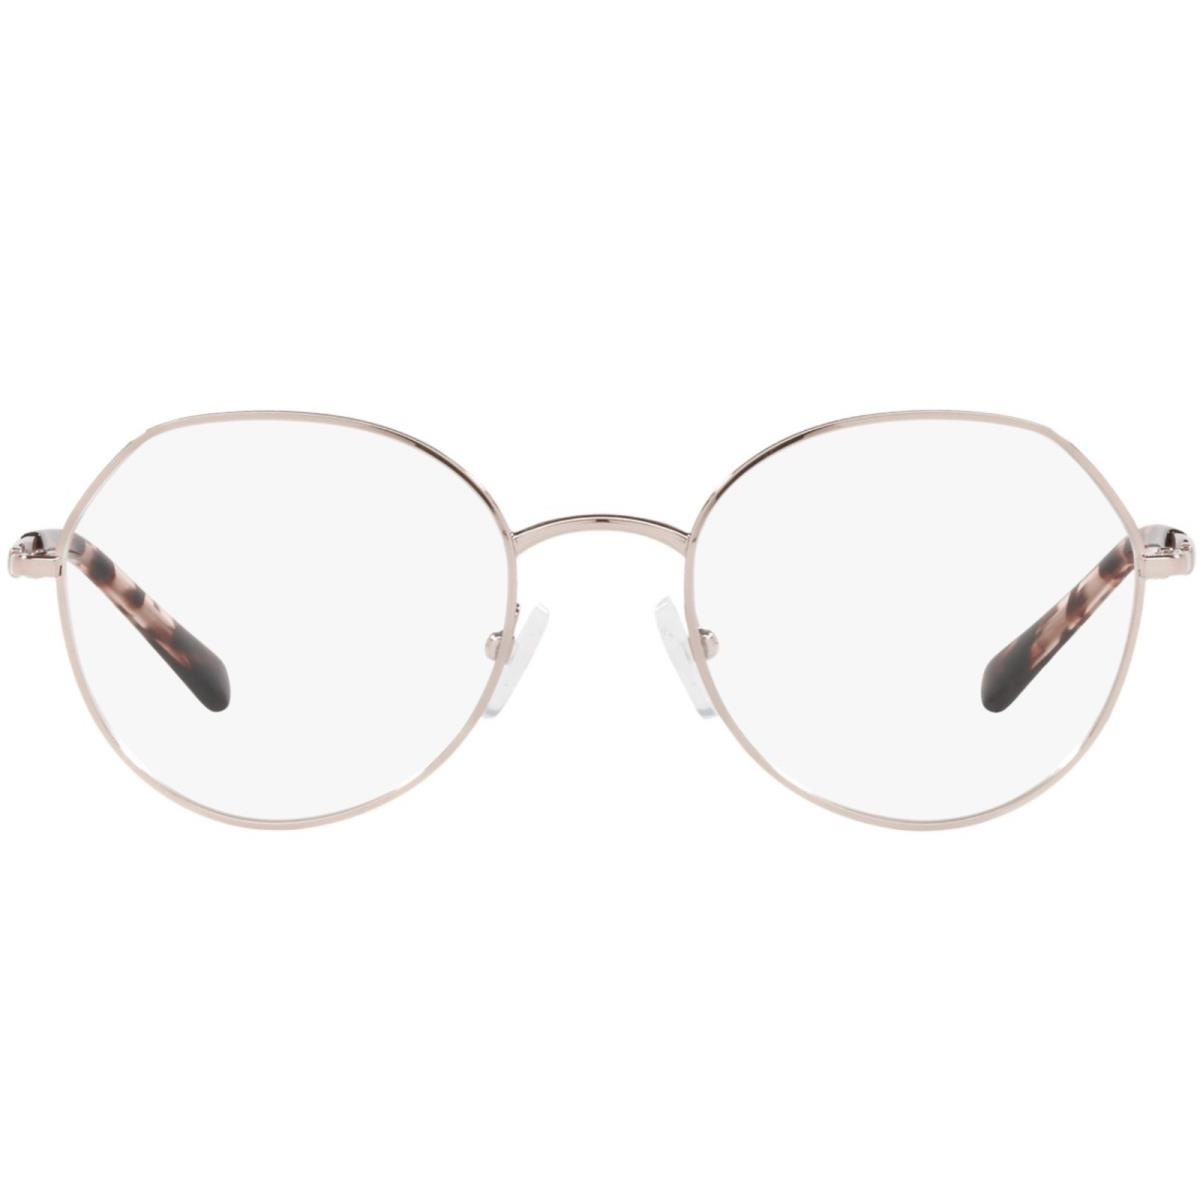 Armani Exchange Eyeglasses 0AX1048 6103 Rose Gold Frame 50MM Rx-able